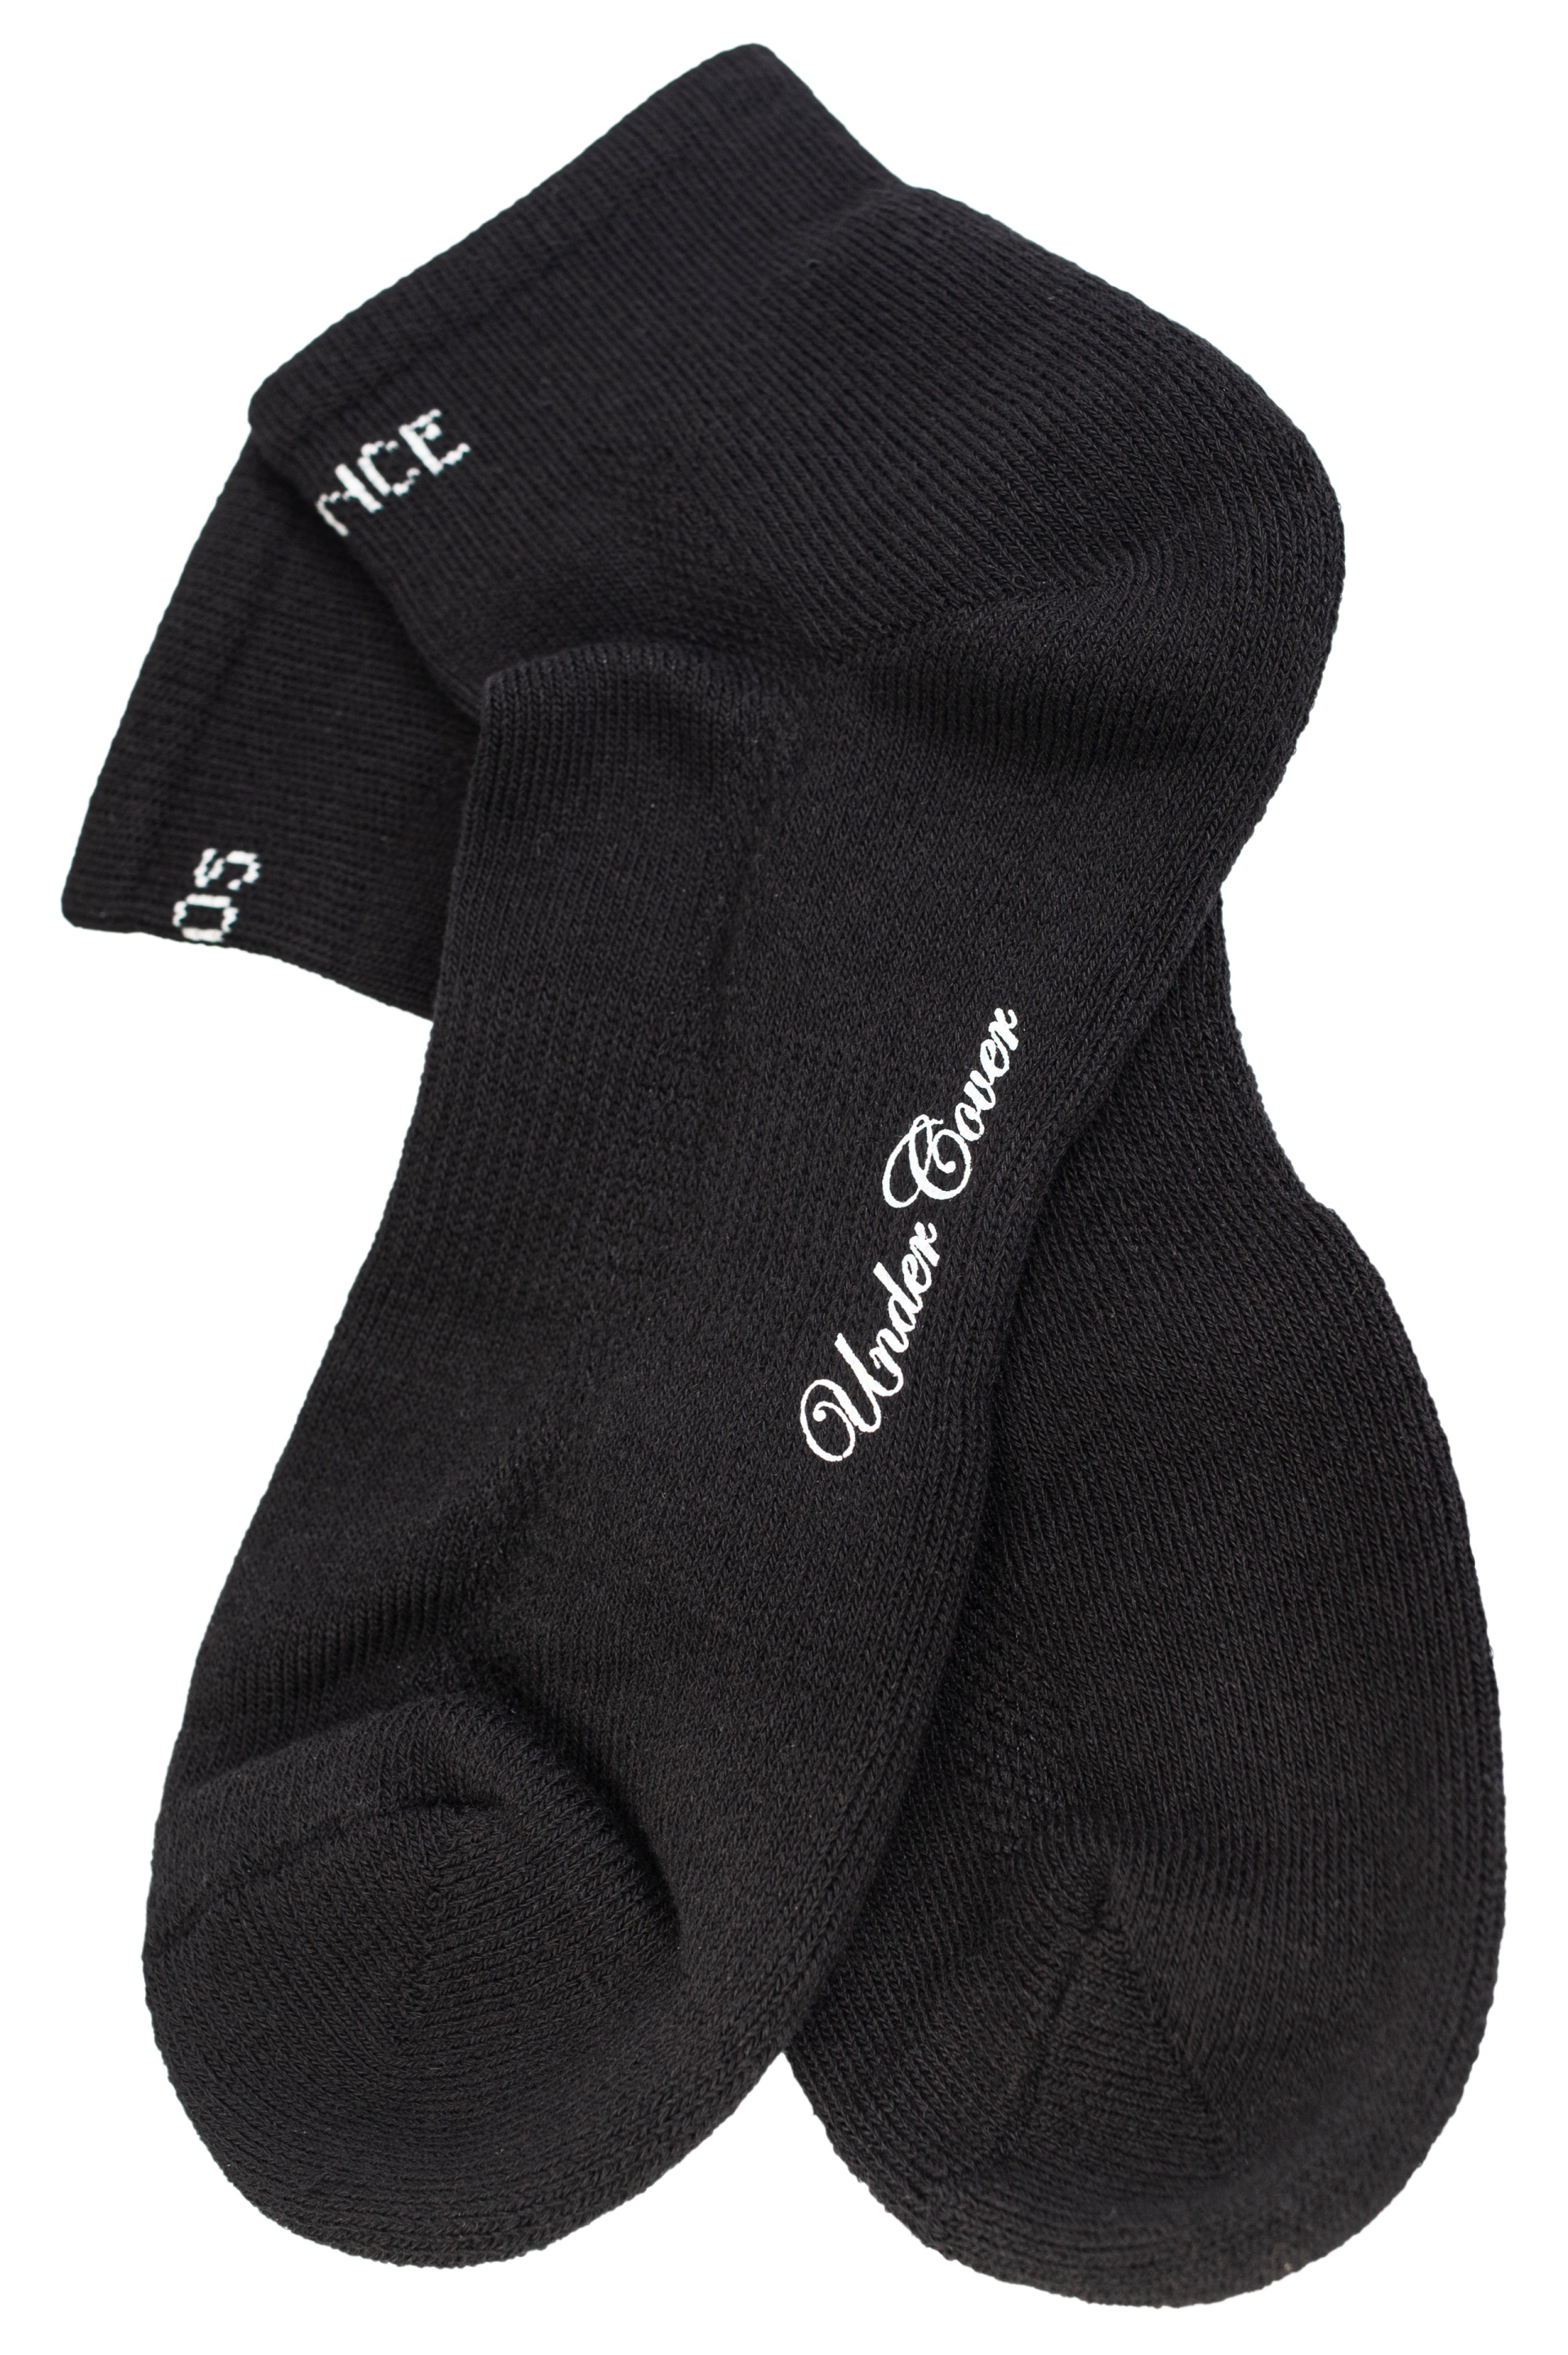 Undercover Black Chaos Balance Socks